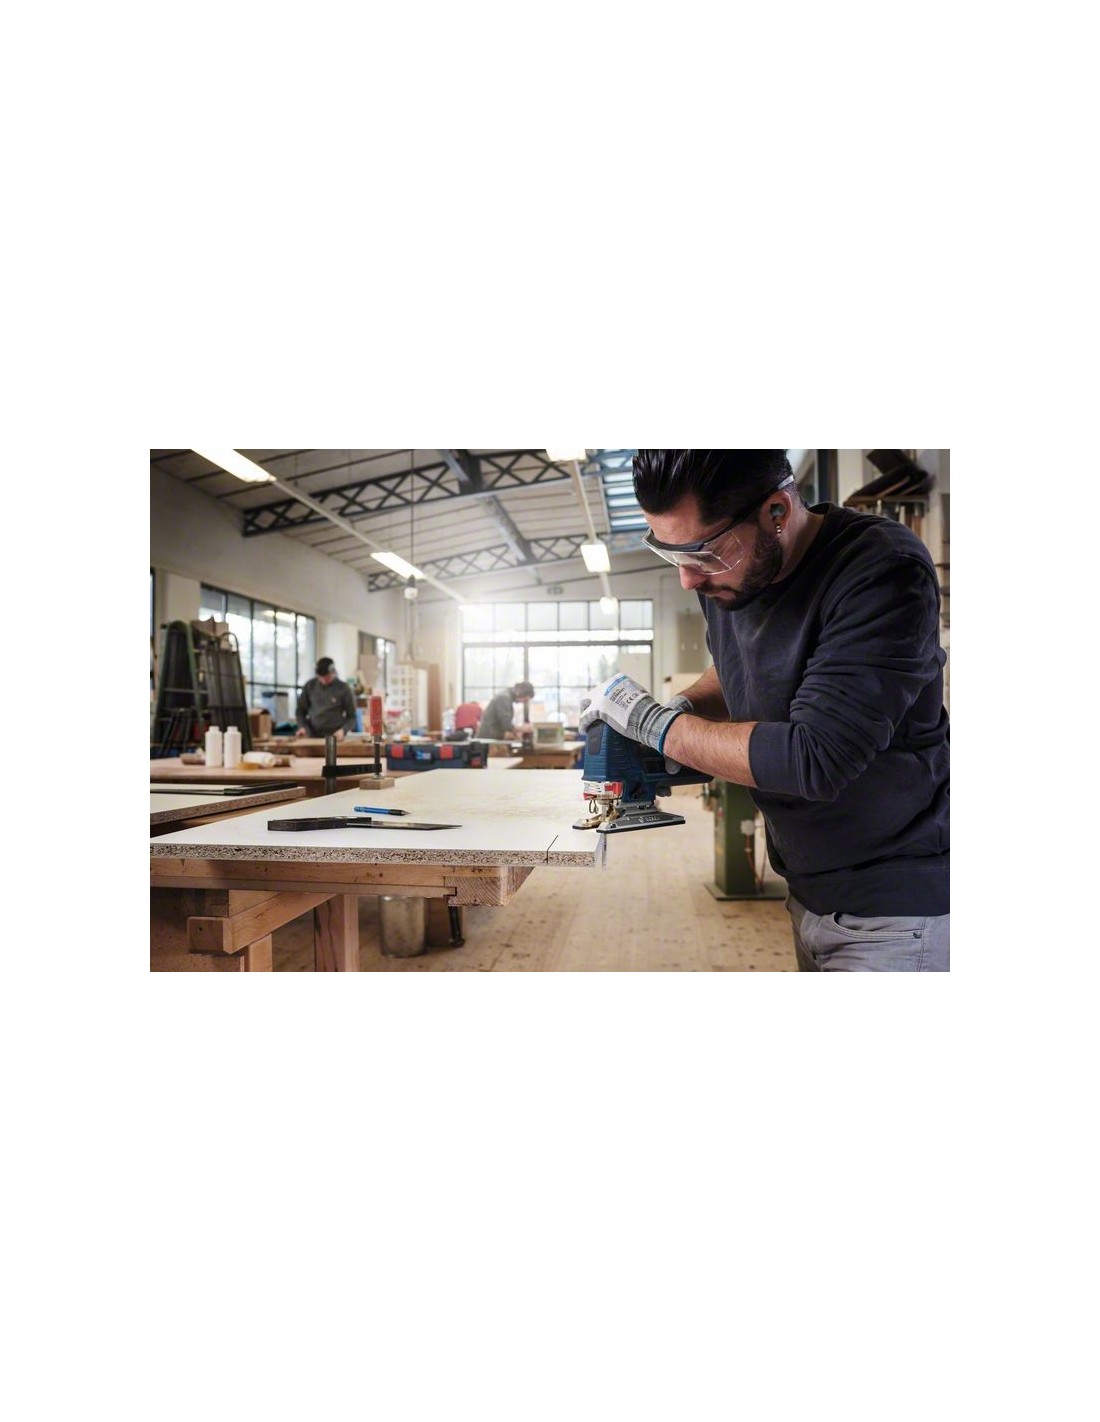 Hoja sierra de calar T 234 X Progressor for Wood - Bosch Professional